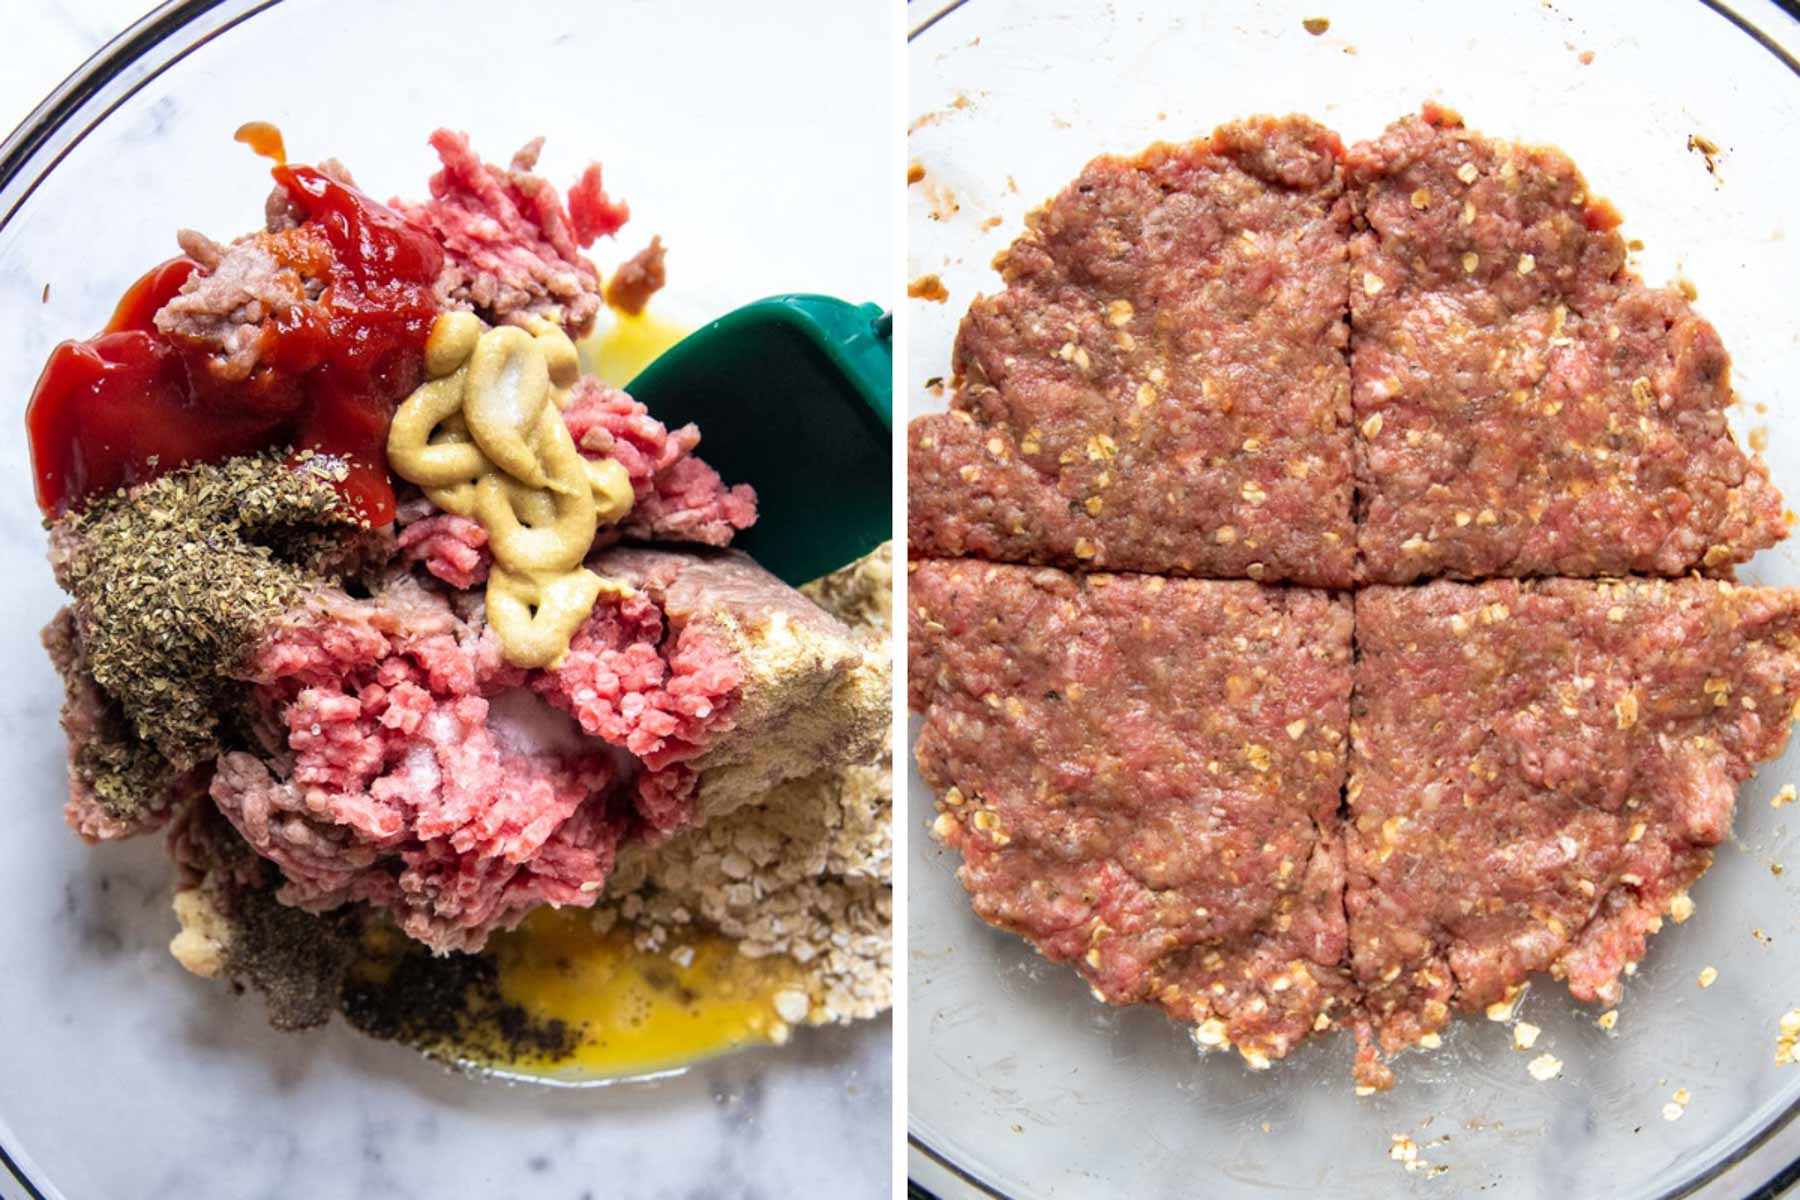 images showing how to make gluten-free hamburger steak patties.